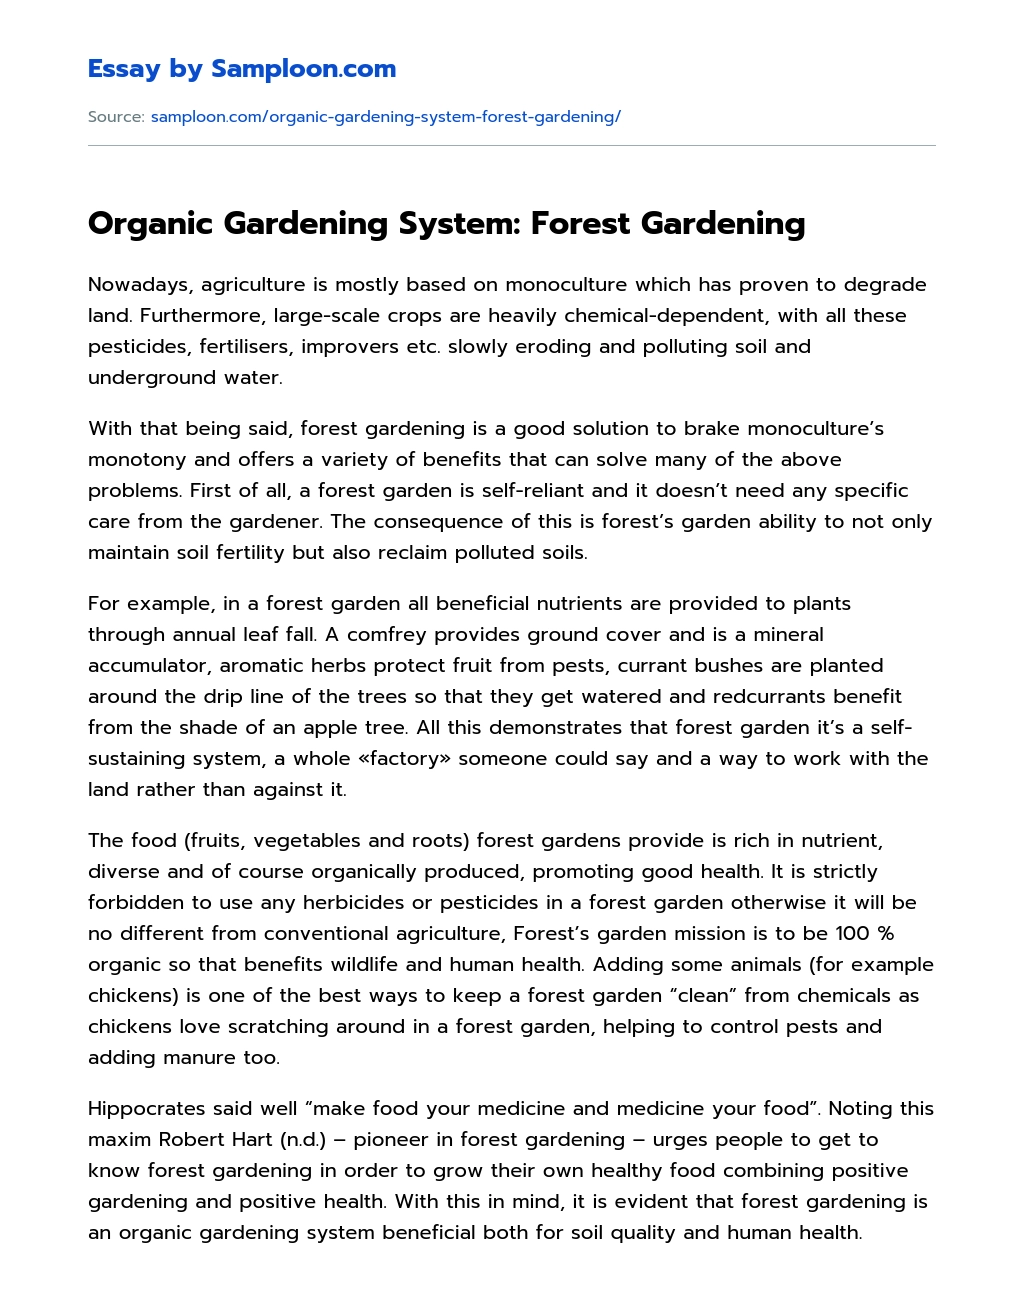 Organic Gardening System: Forest Gardening essay